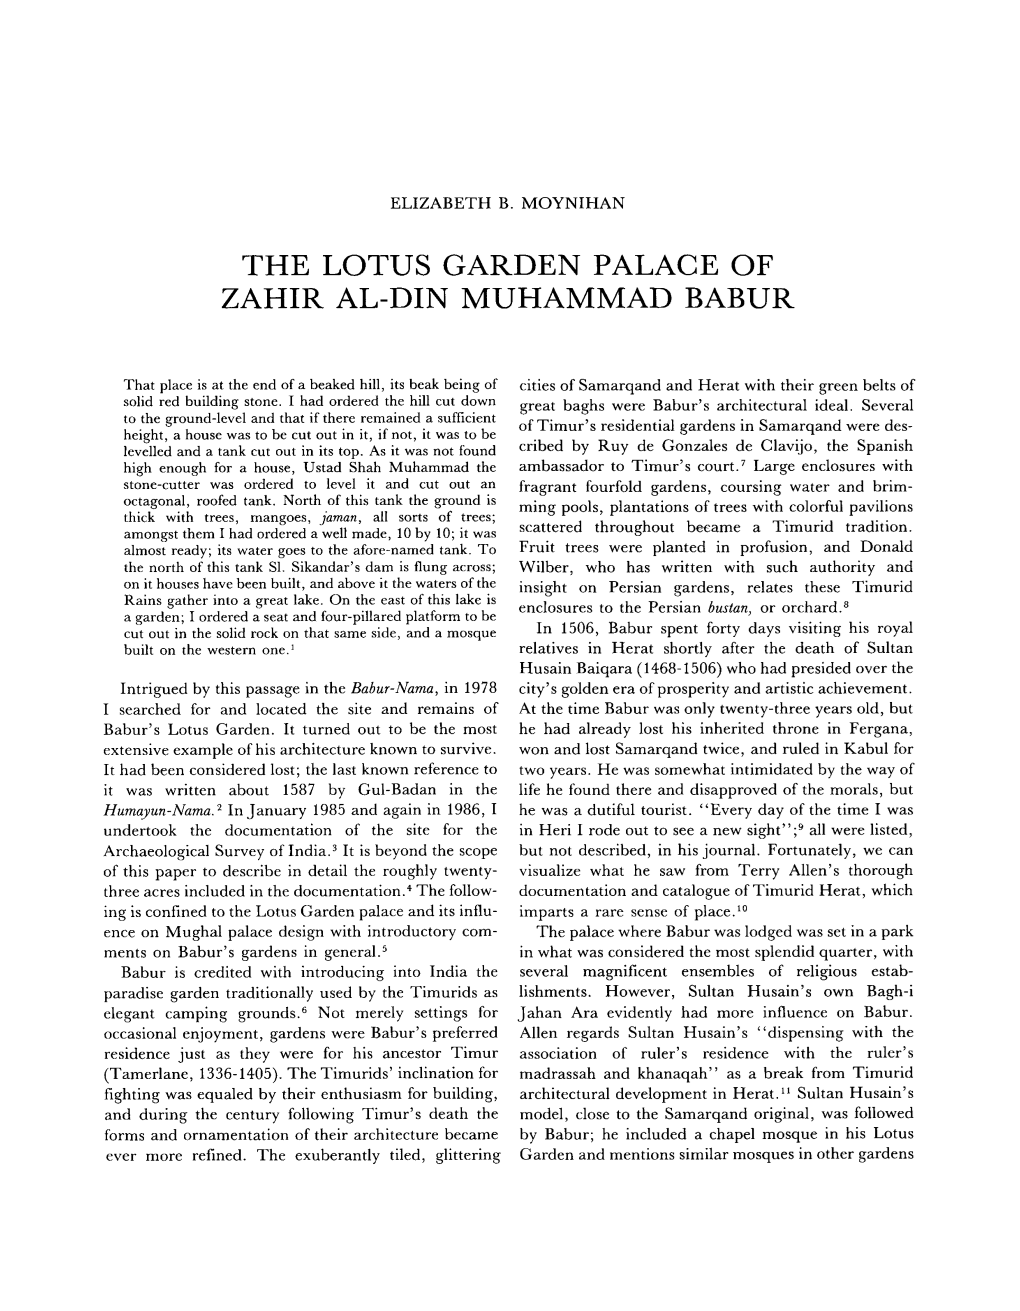 The Lotus Garden Palace of Zahir Al-Din Muhammad Babur